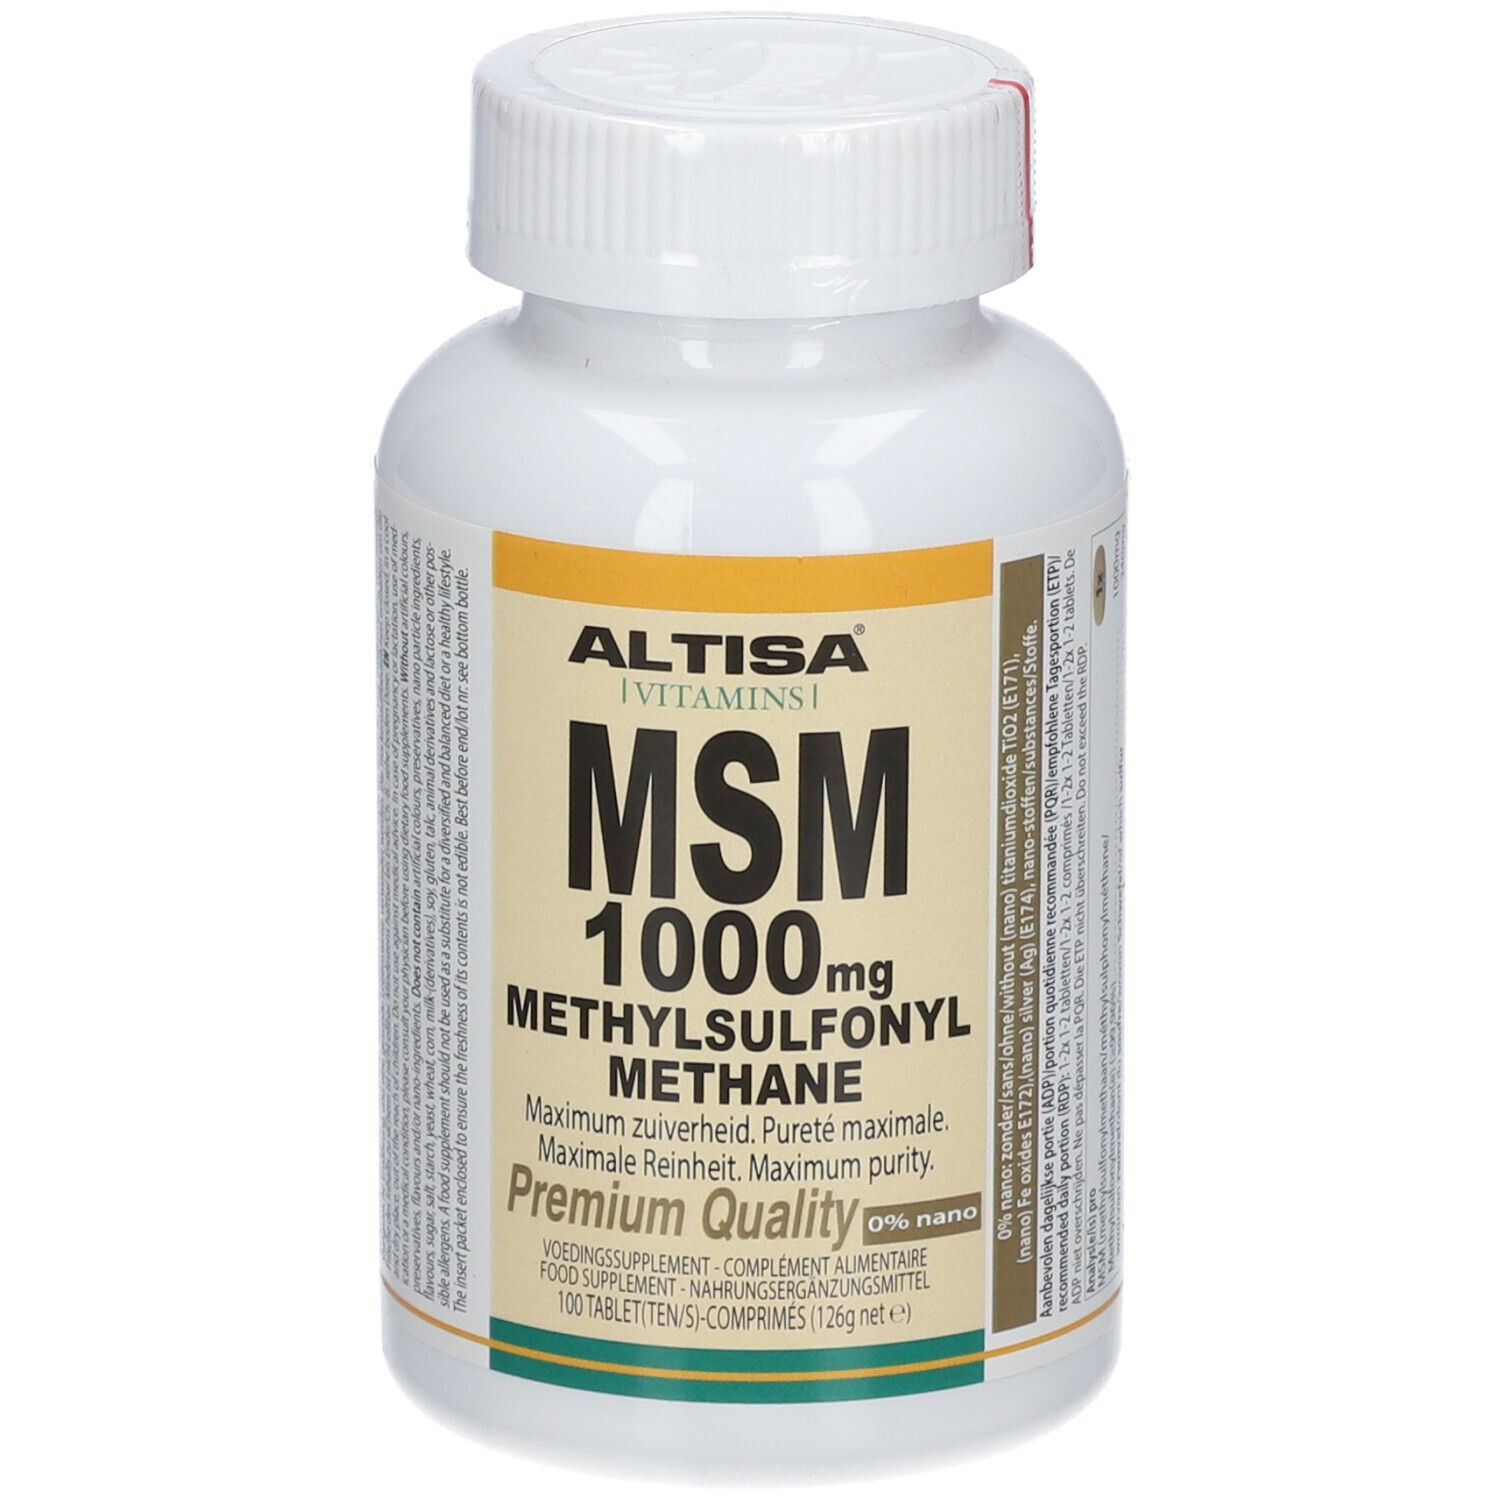 Altisa MSM 1000 mg